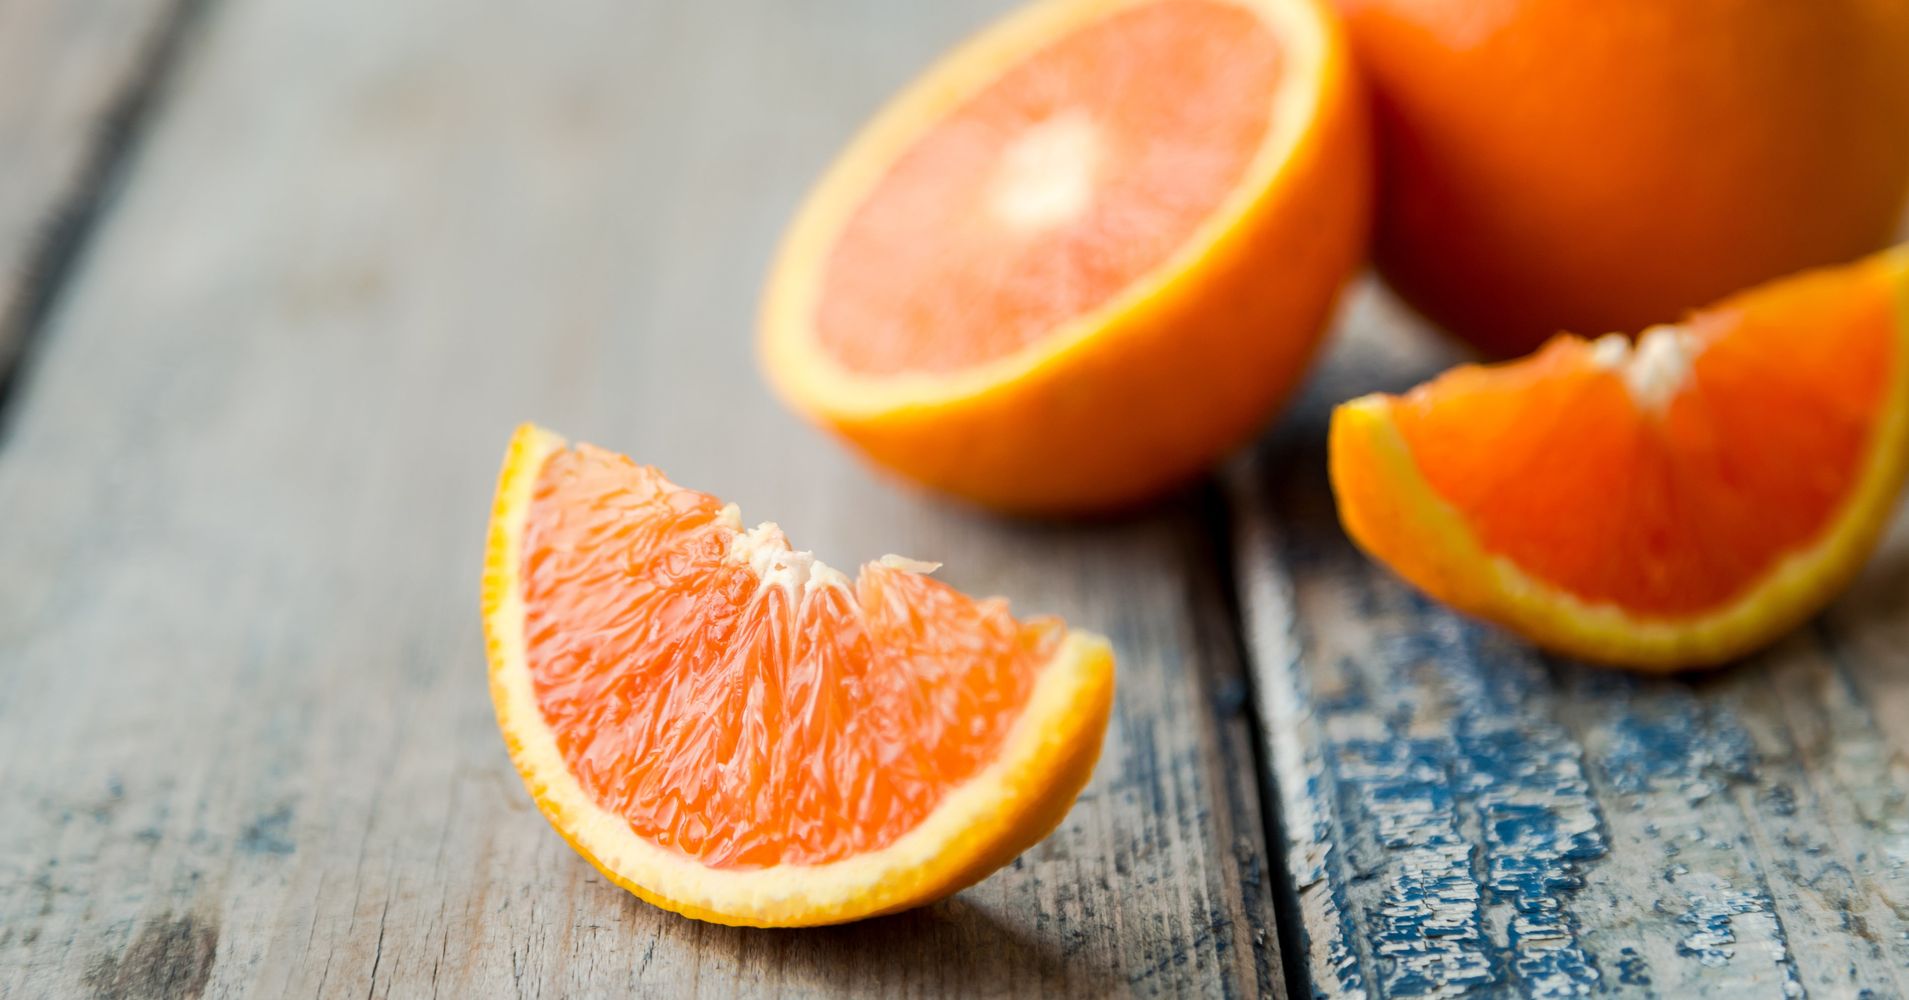 are oranges the best source of vitamin c